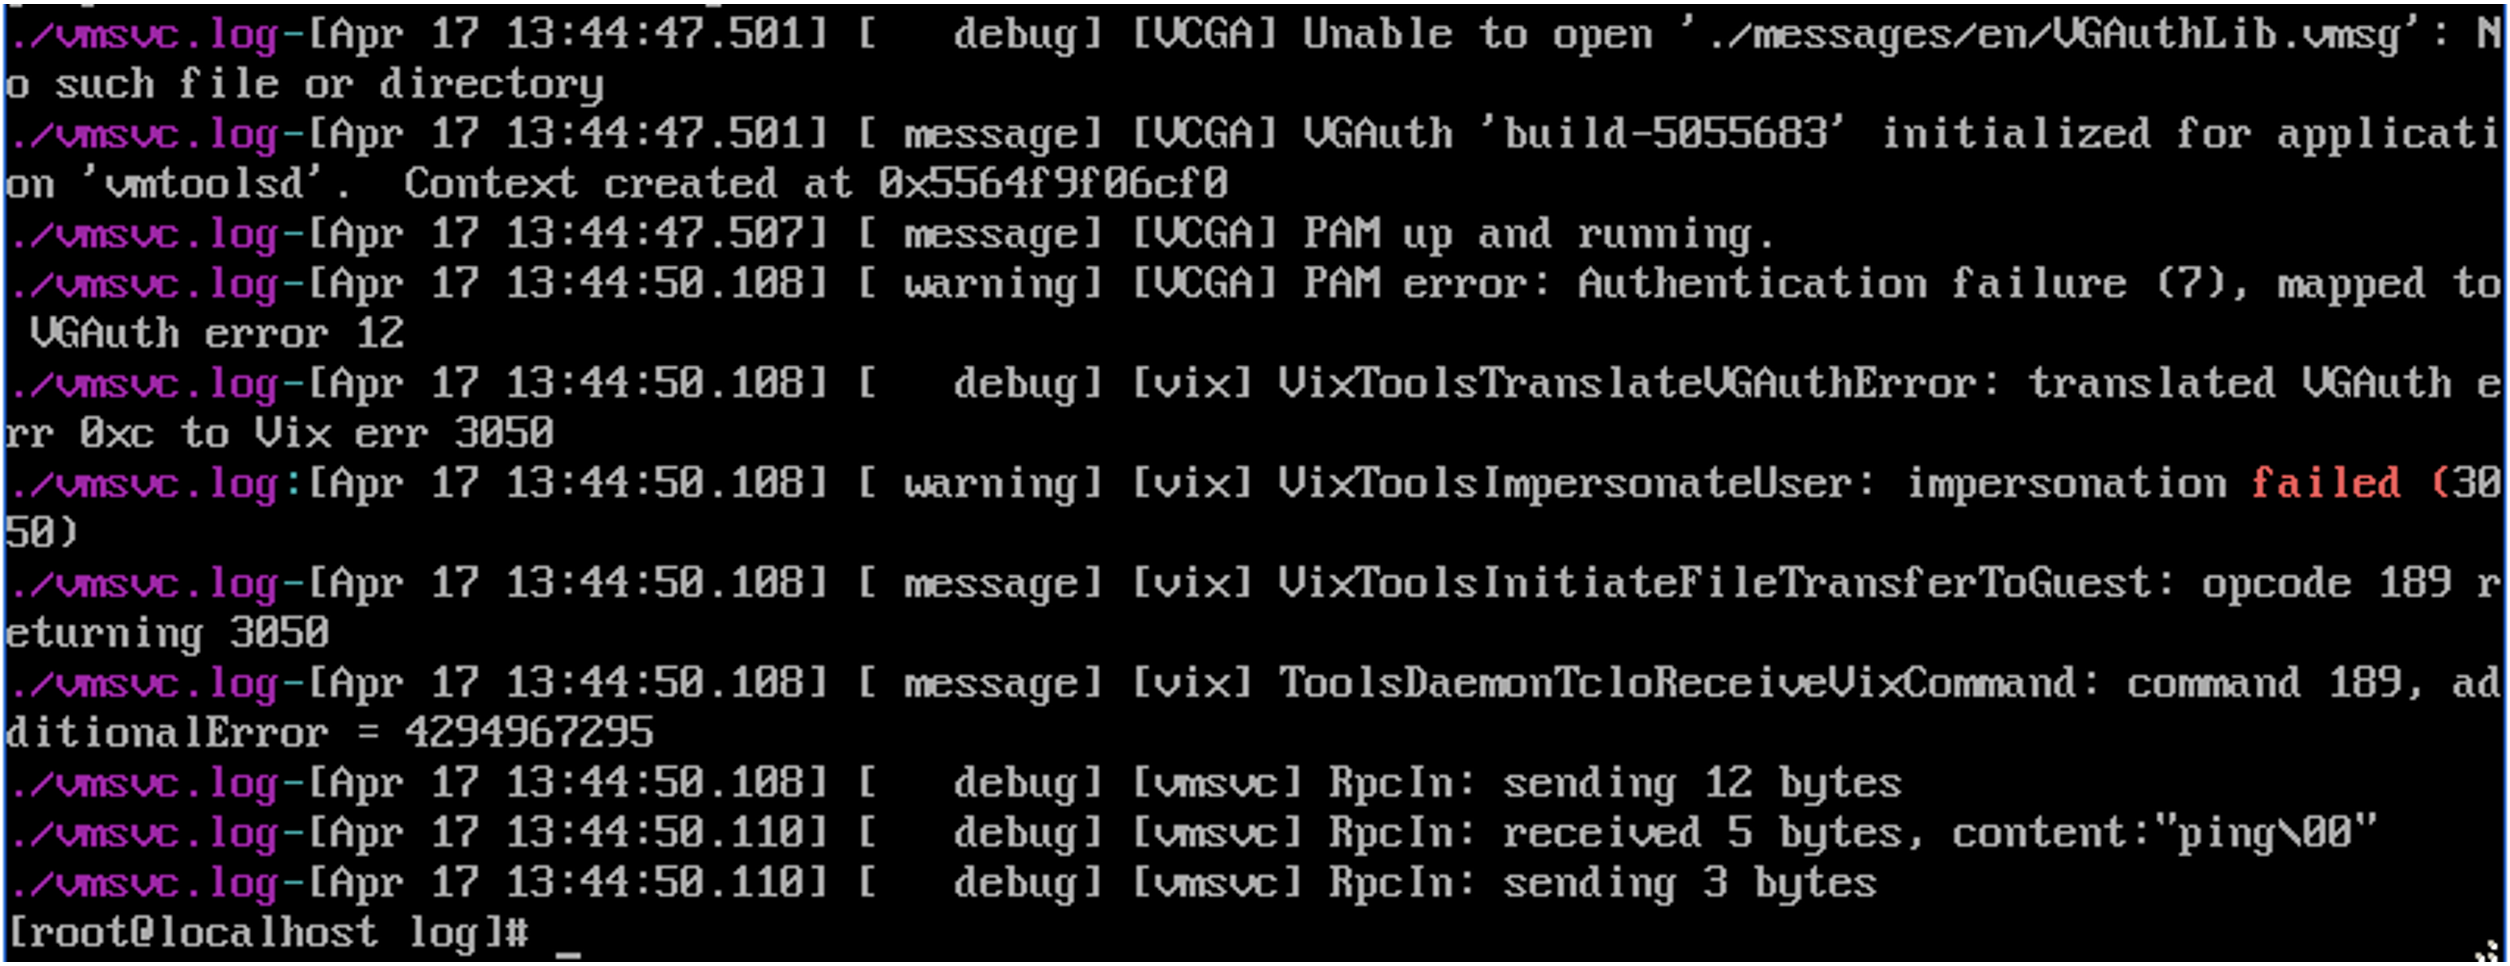 Linux failed authentication vmsvc.log